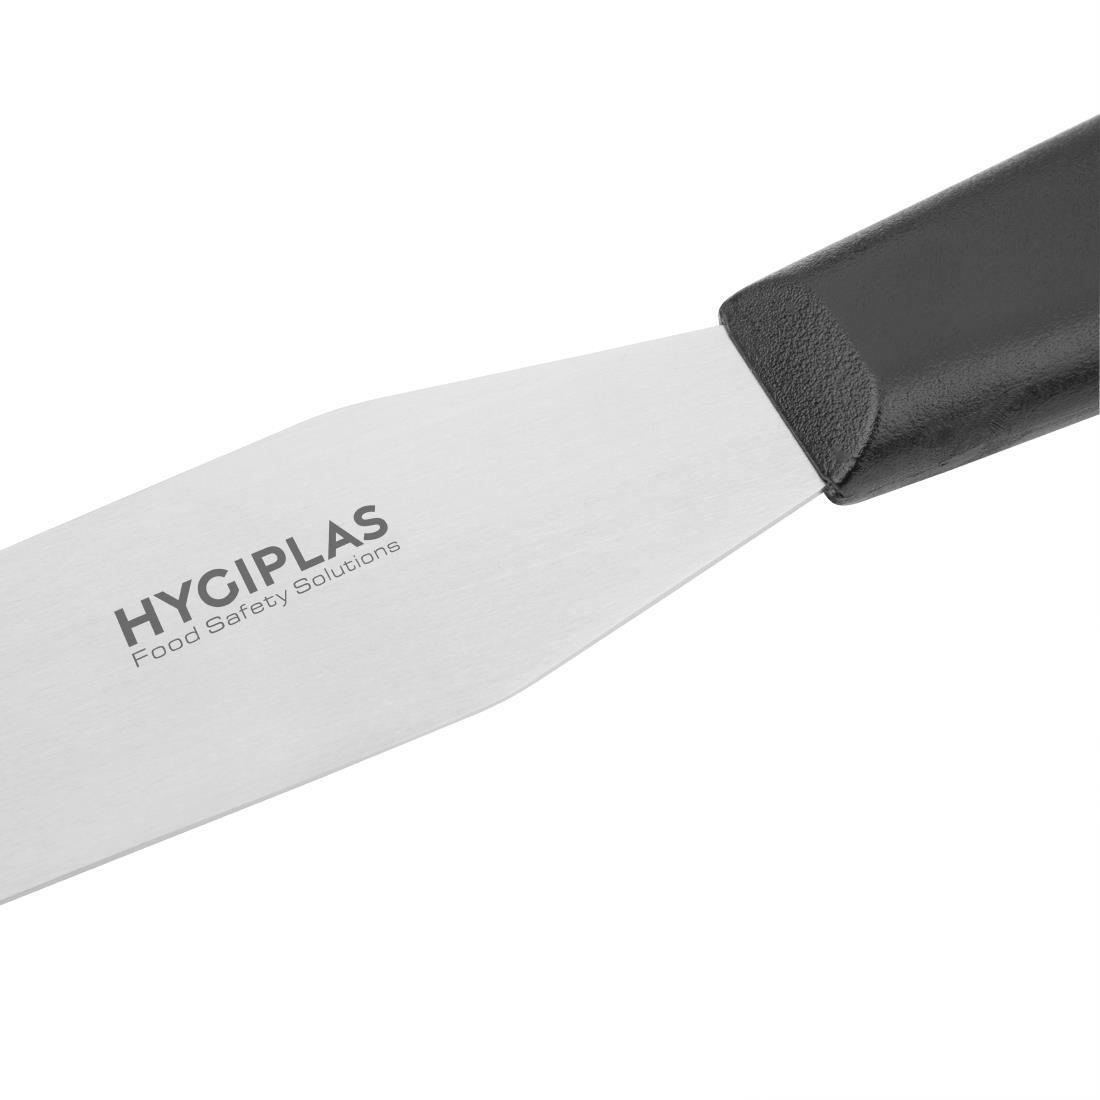 Hygiplas Straight Blade Palette Knife Black 15cm - D402  - 3